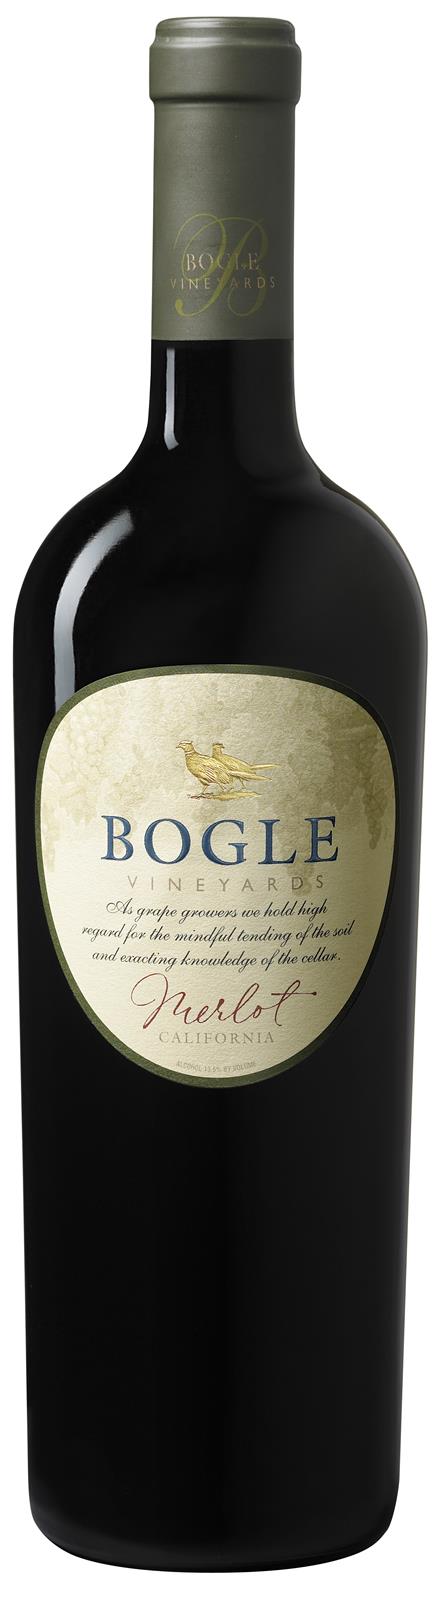 Bogle Vineyards Merlot 2019 (California)